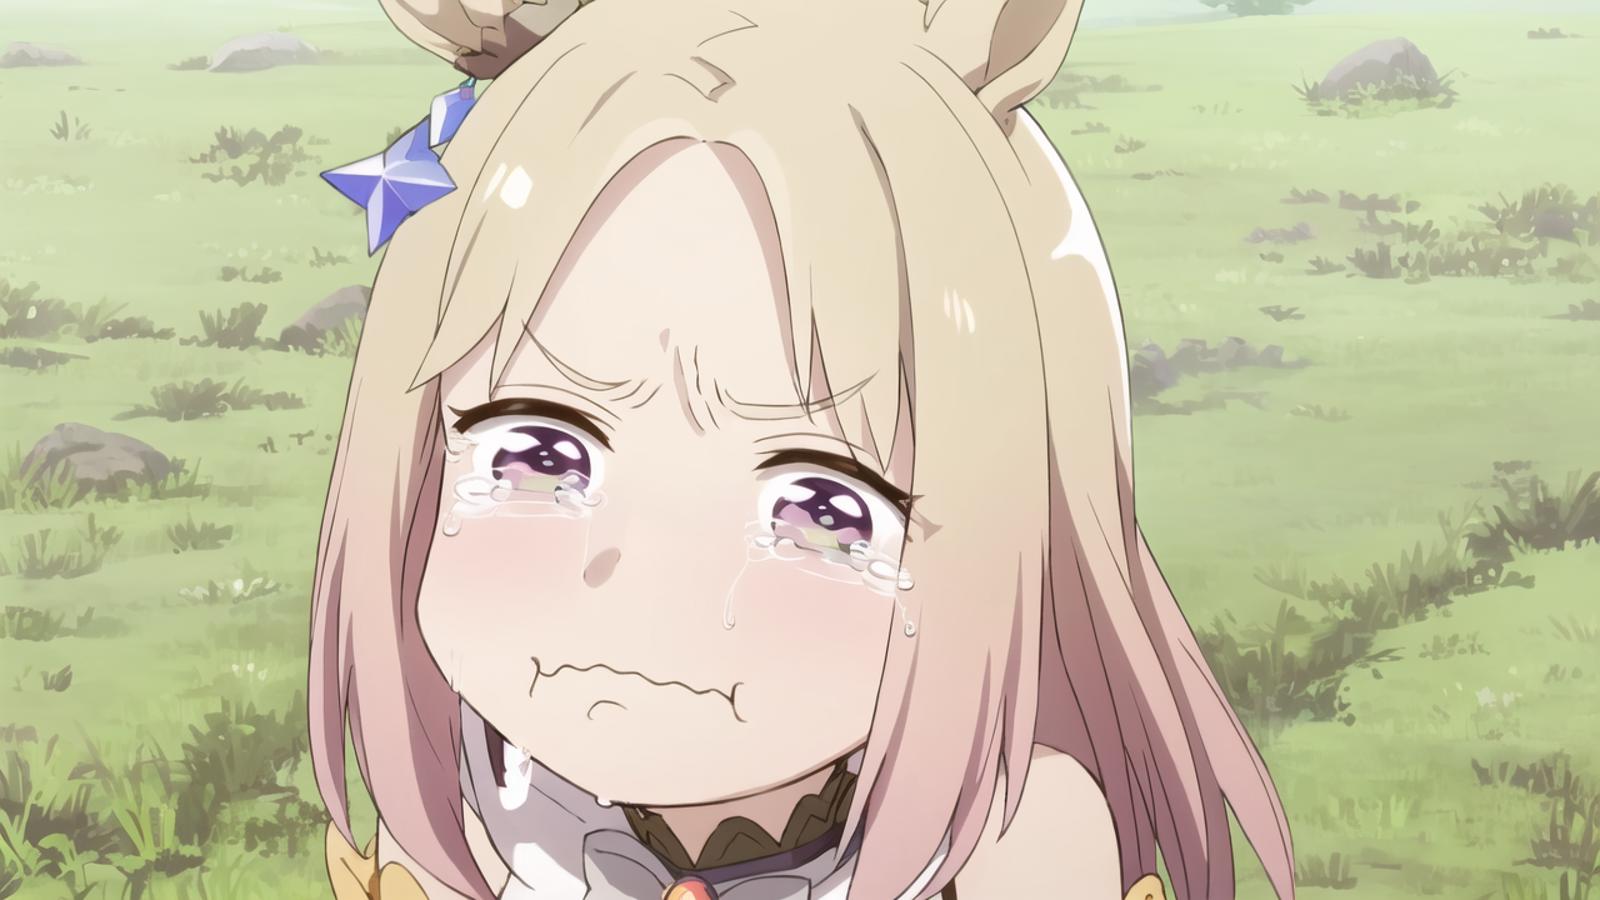 Aqua crying/begging anime meme | Kono Subarashii Sekai ni Bakuen wo! | KonoSuba image by xiao_xv